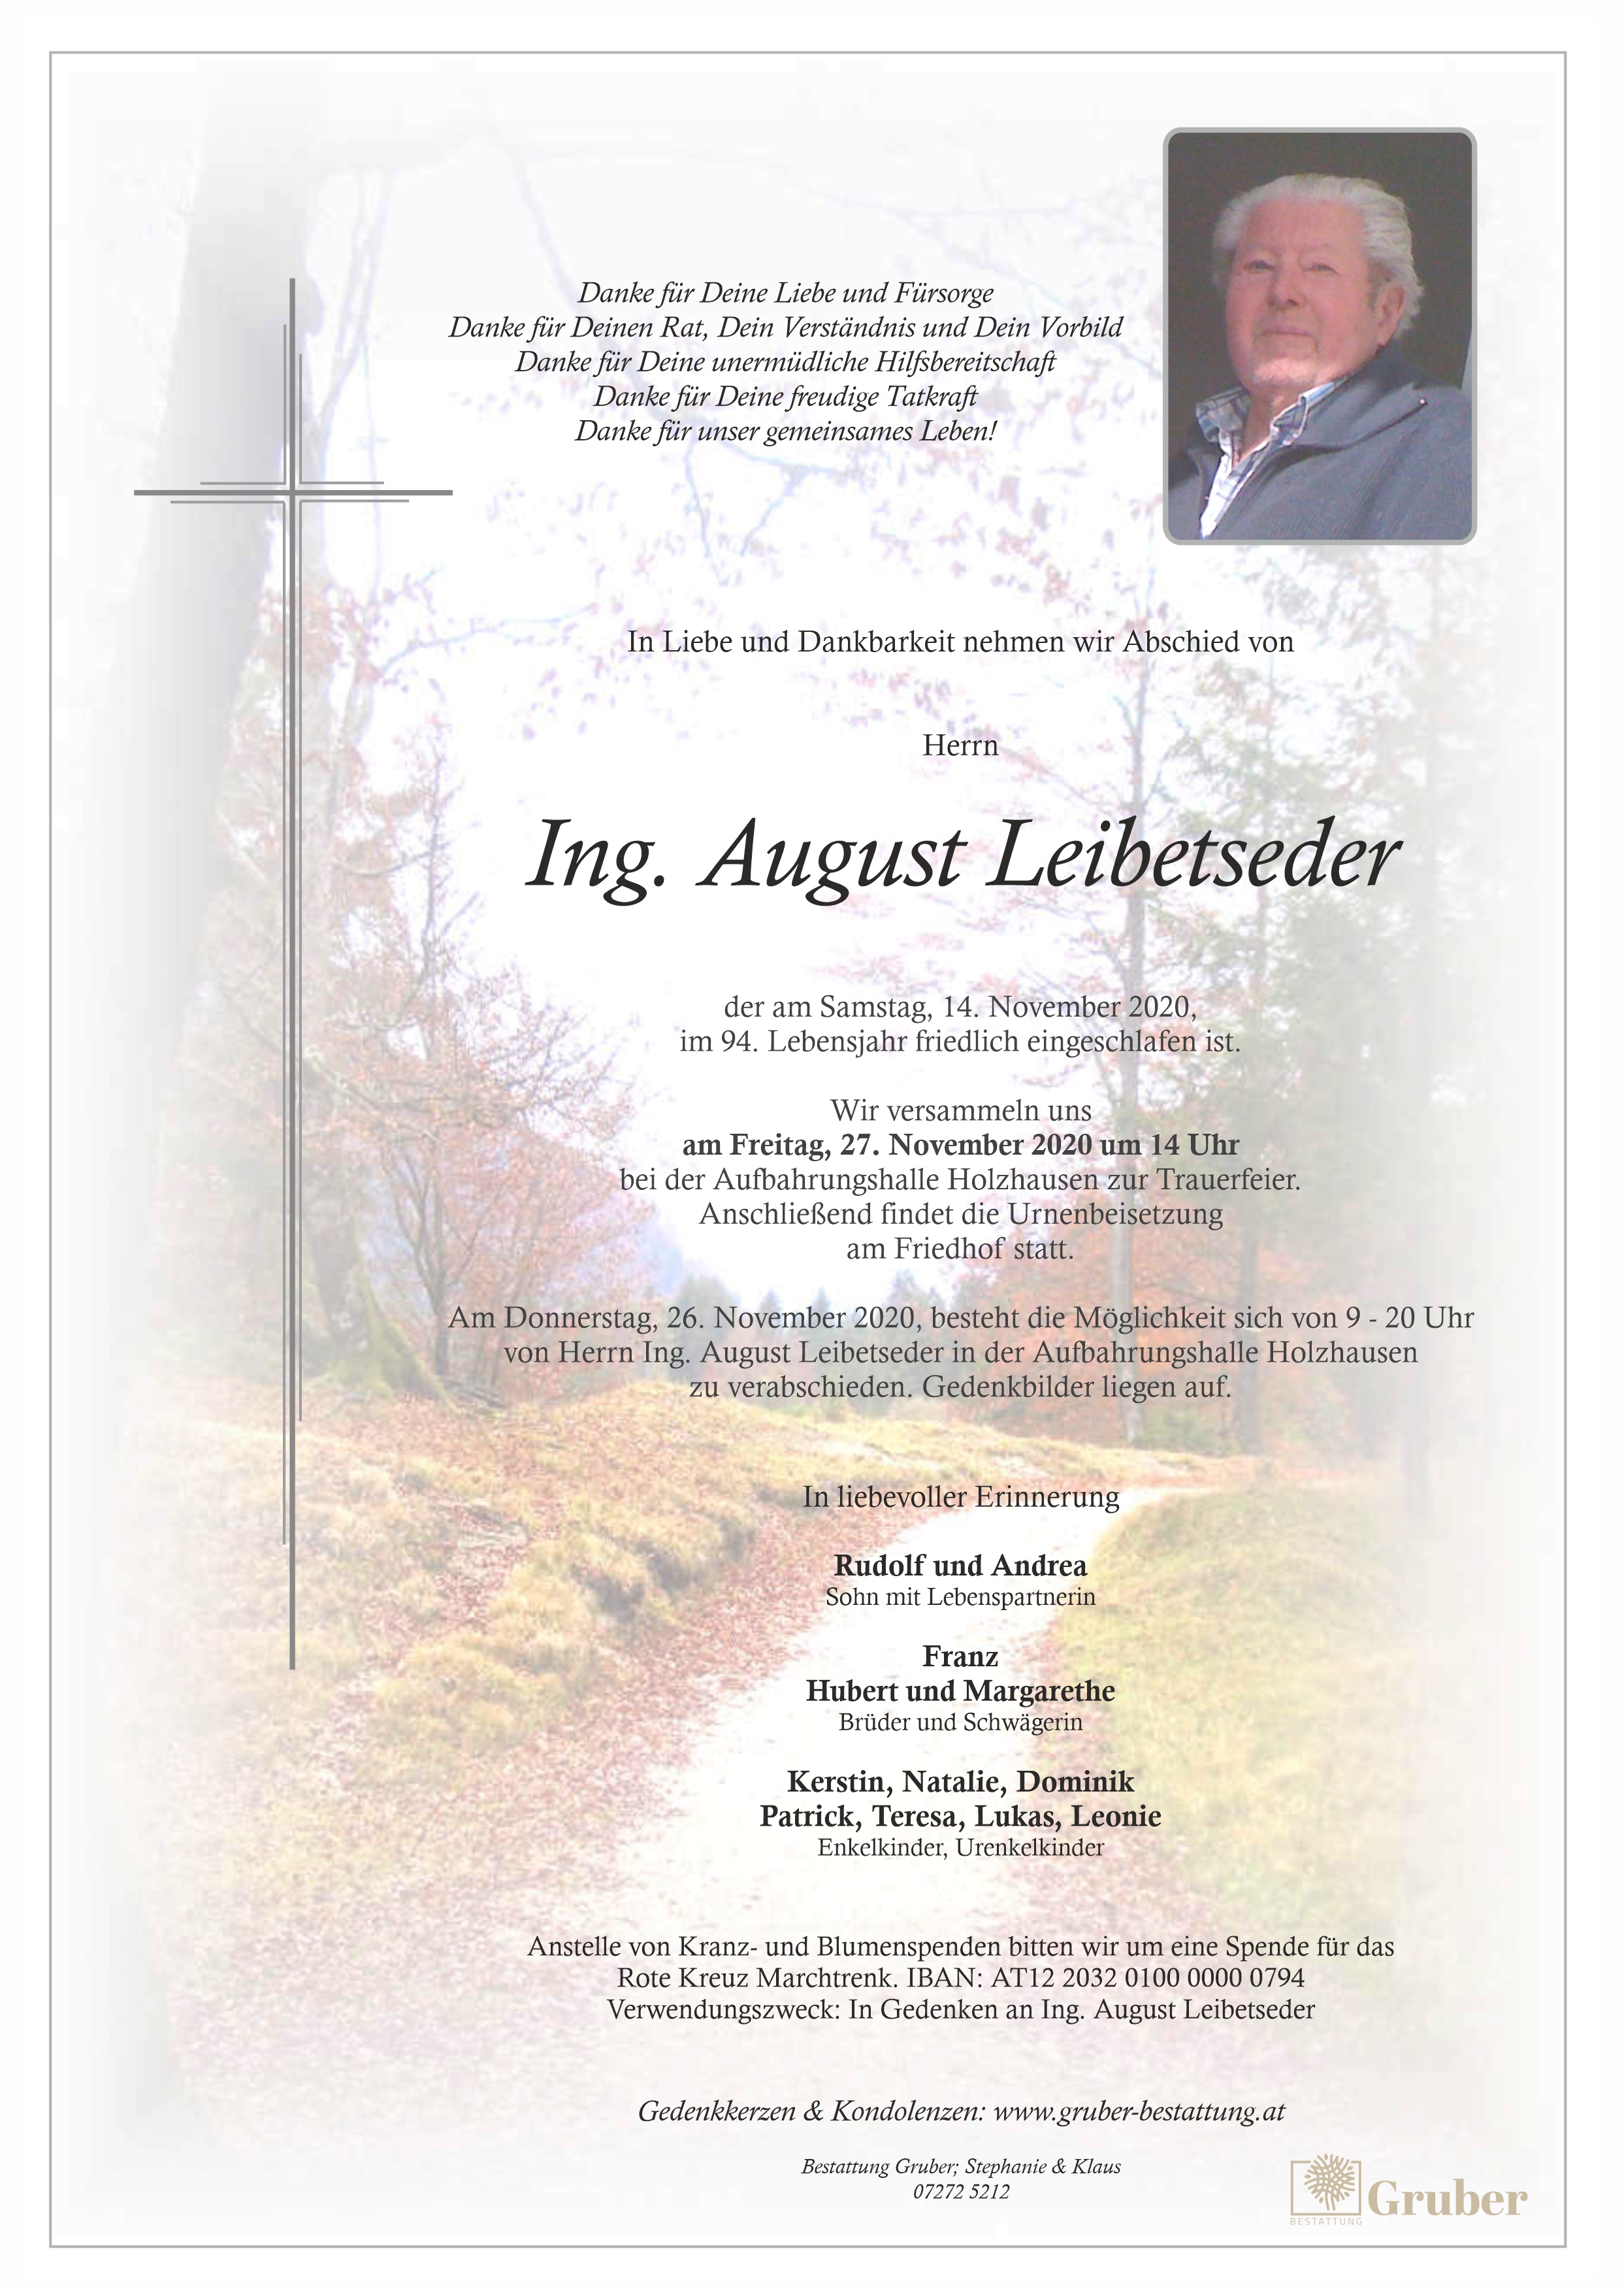 Ing. August Leibetseder (Holzhausen)